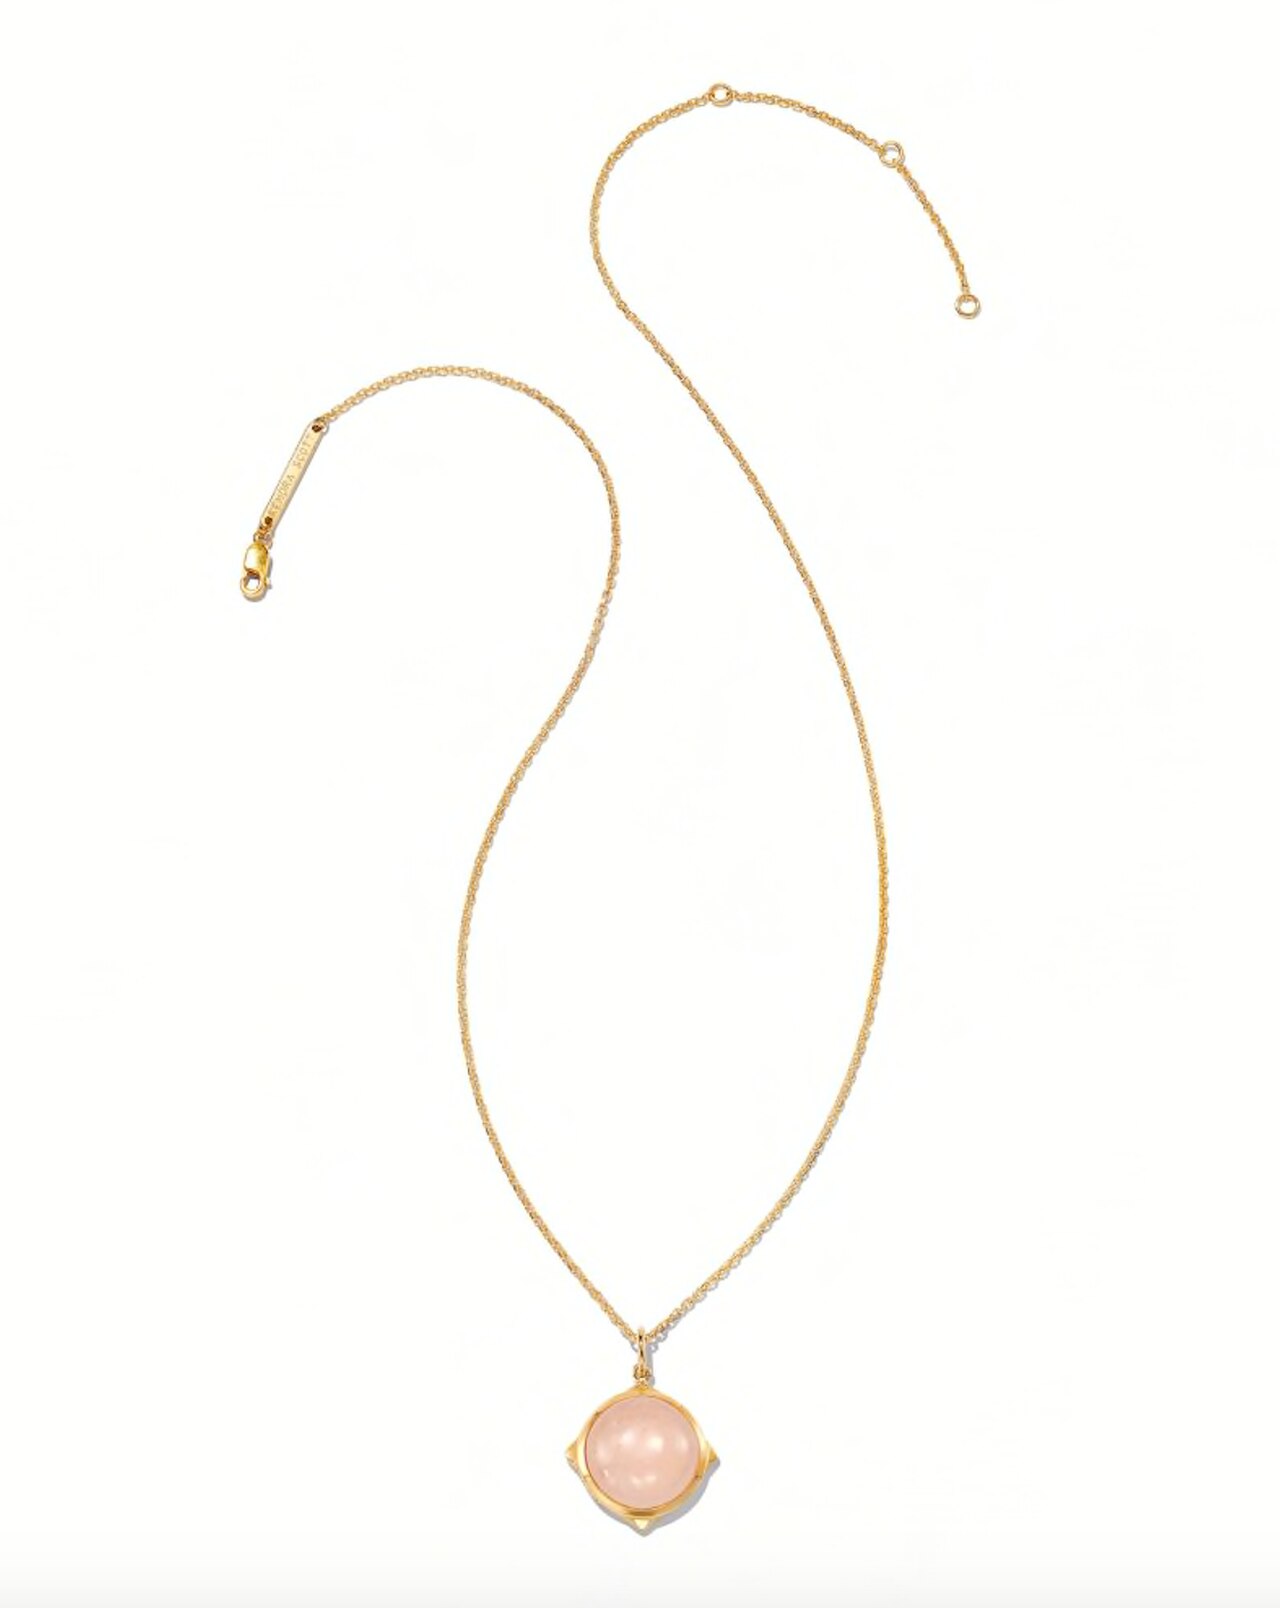 Matilda 18k Gold Vermeil Stone Charm Necklace in Rose Quartz